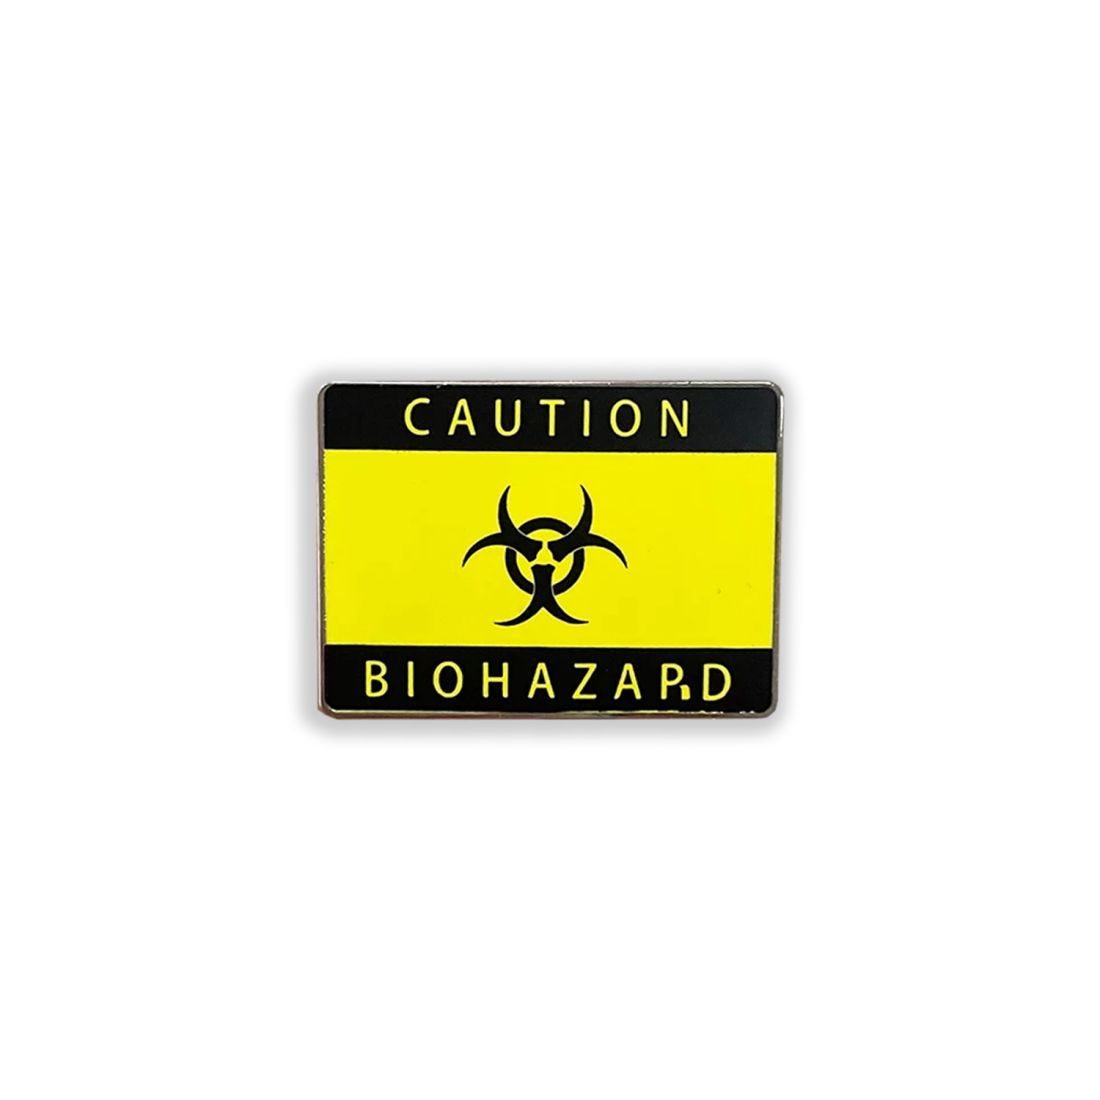 Pin's Caution Biohazard - Attention Risque biologique